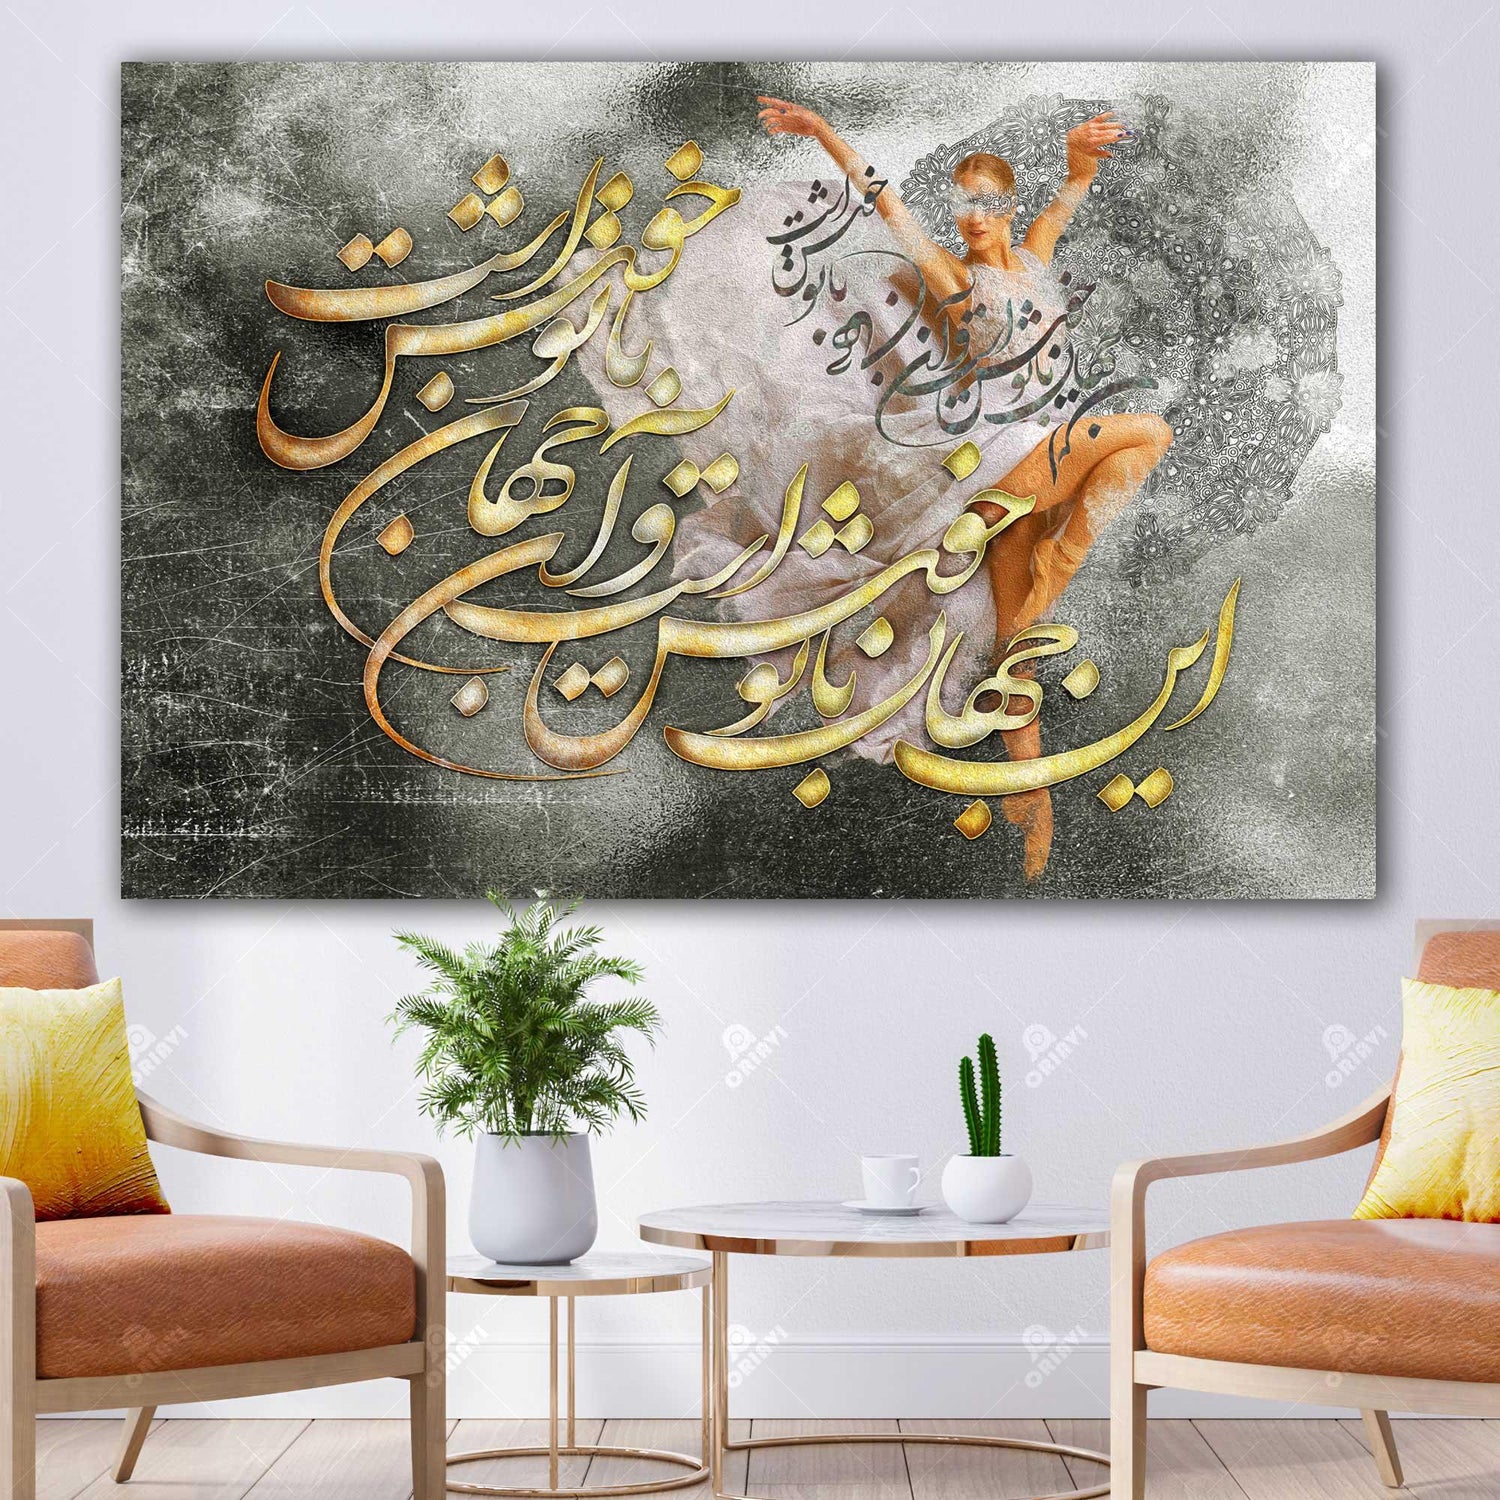 این جهان با تو خوش است و آن جهان با تو خوش است - Persian calligraphy wall art, High Quality and Ready to Hang. This Modern Persian Wall décor completes and elevates your home. Amazing and eye-catching for your home or office.